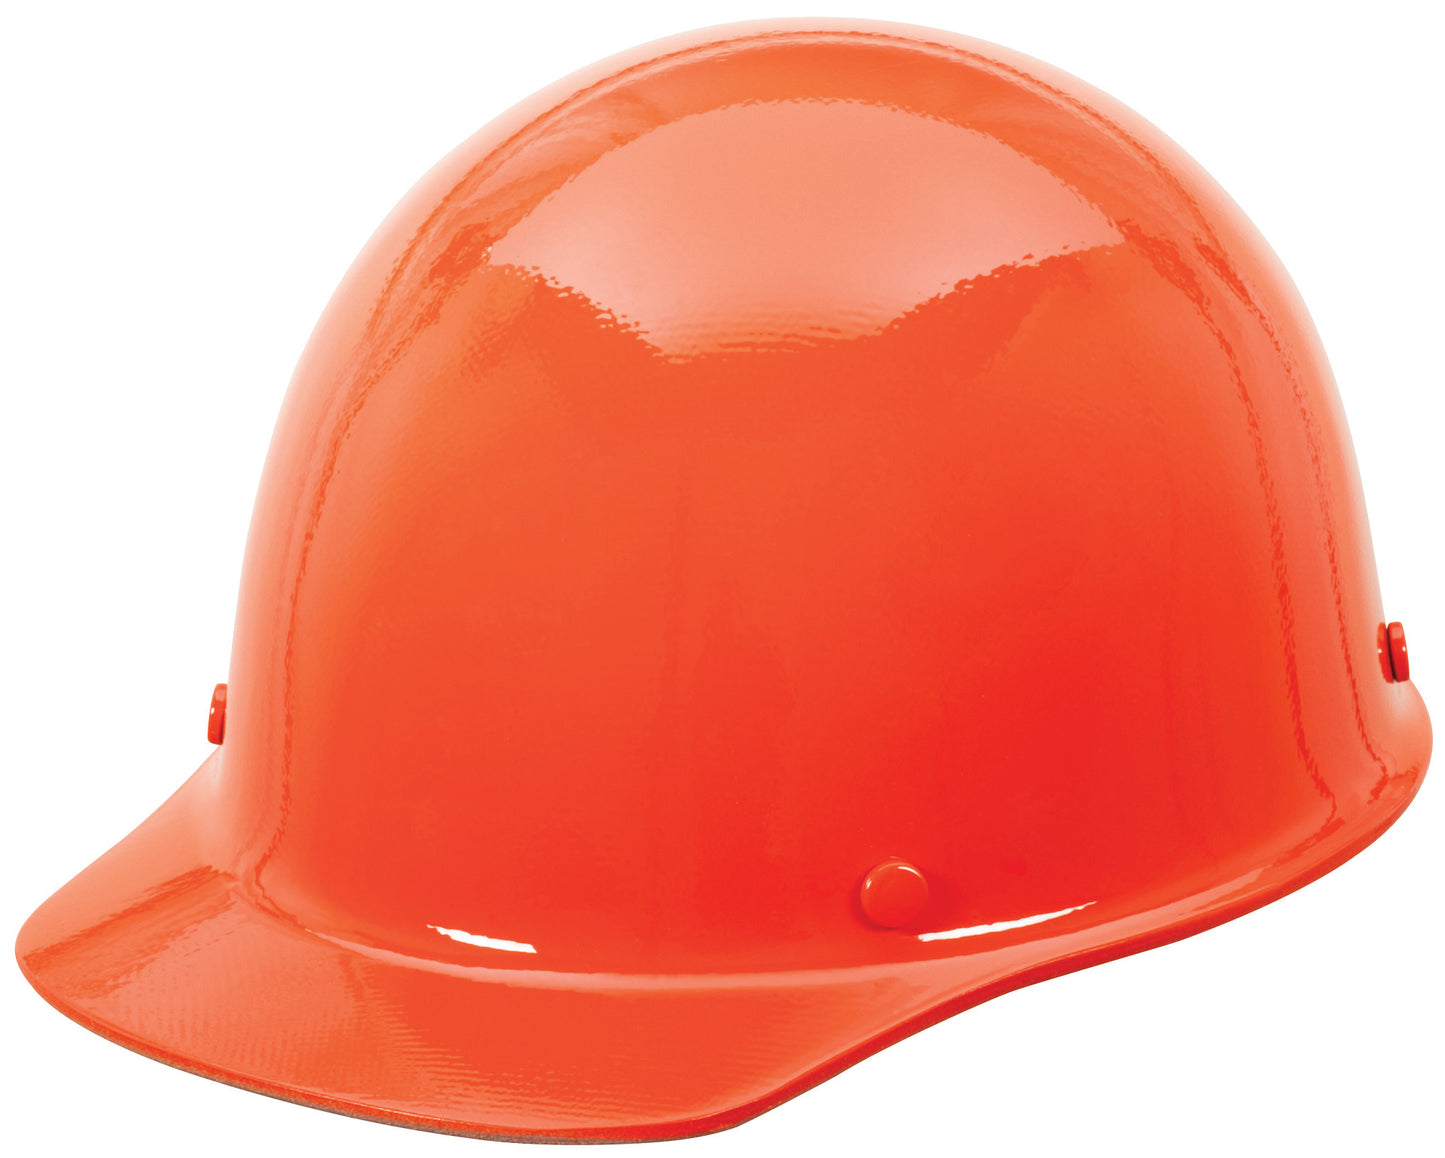 Skullgard Protective Cap, Orange - w/ Staz-On Suspension, Standard